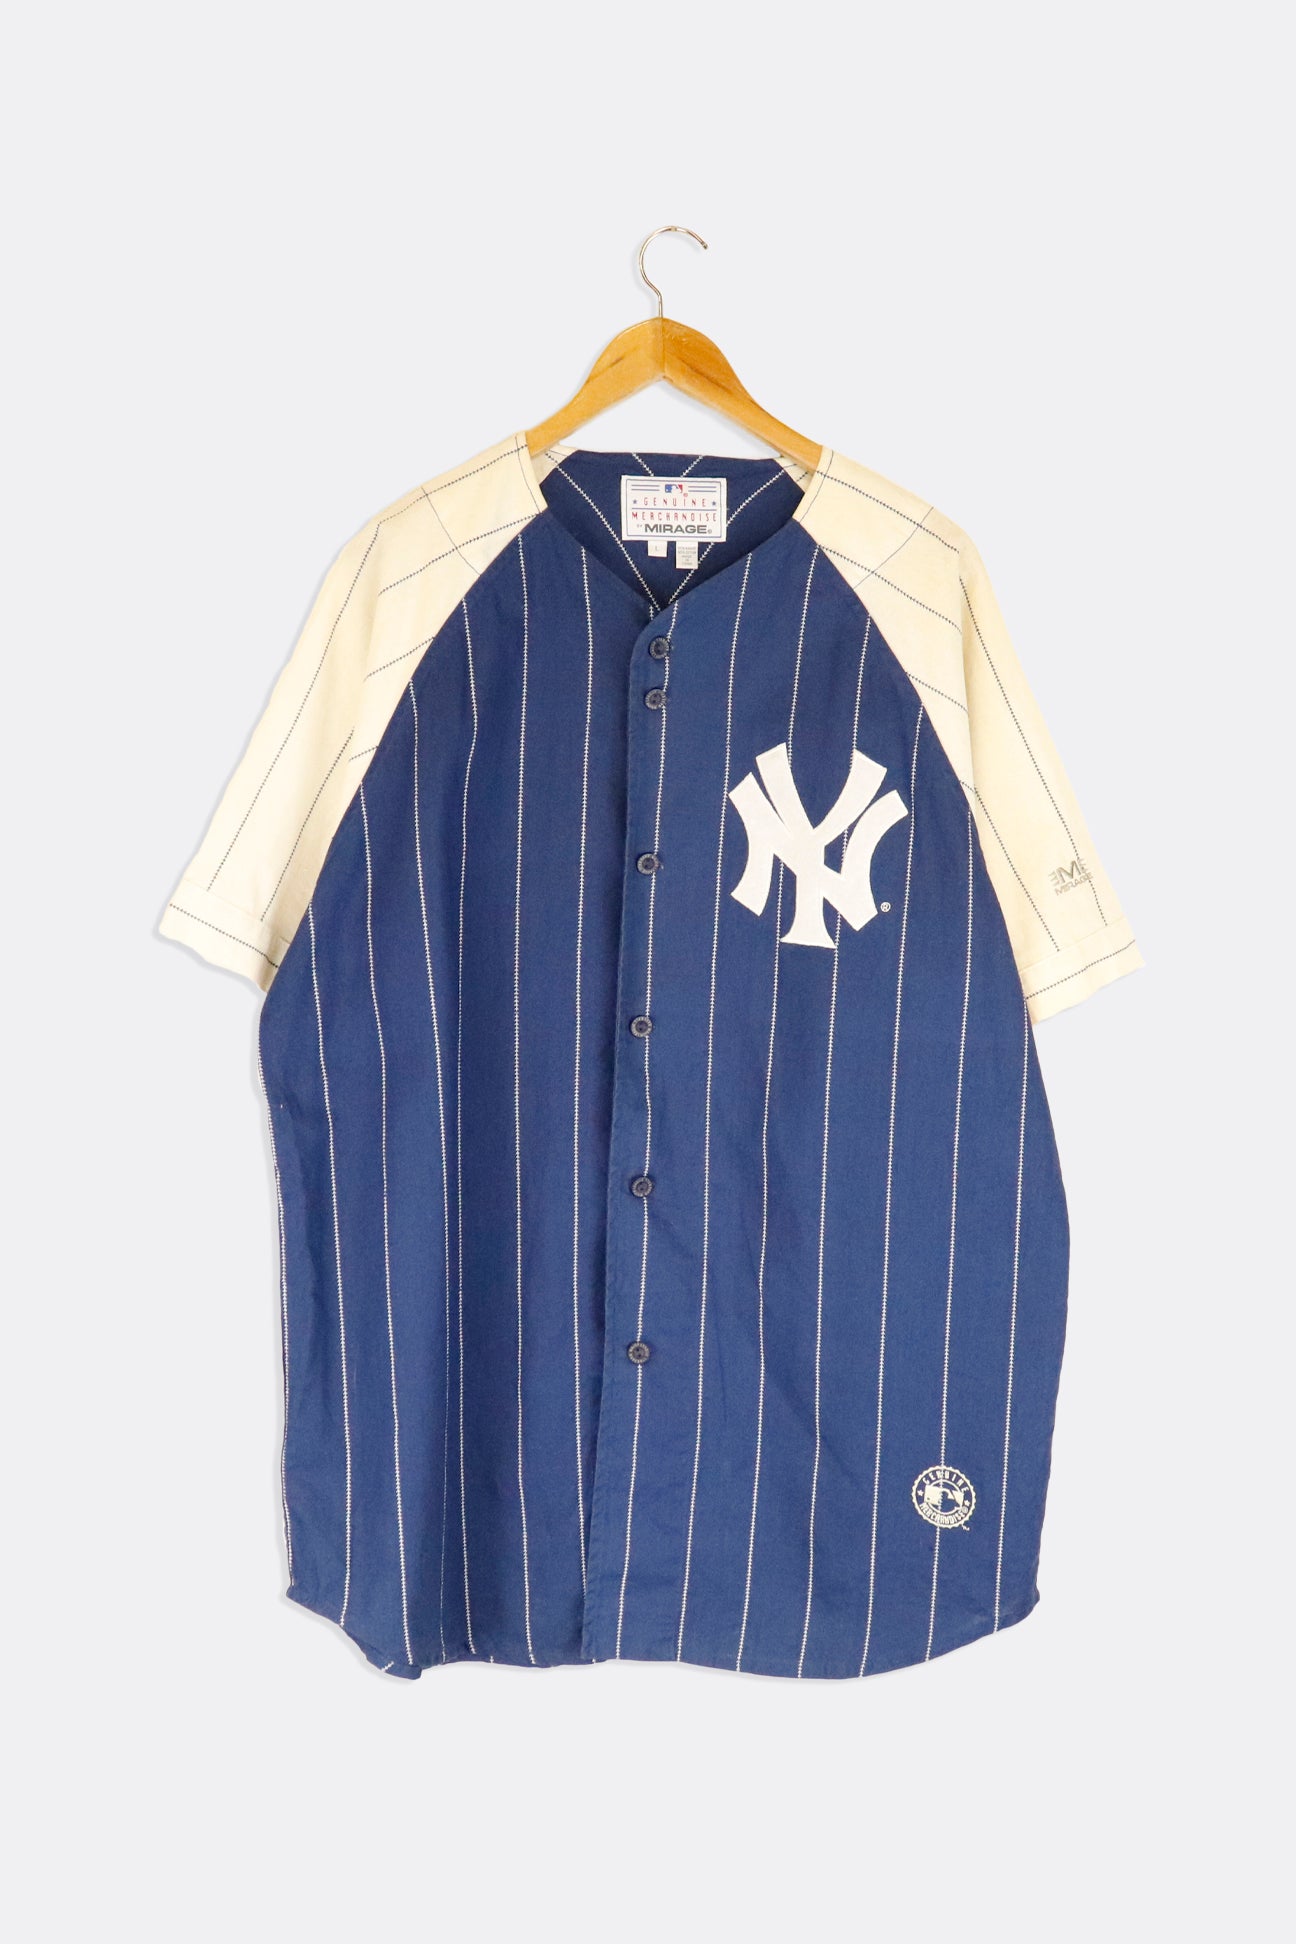 Vintage MLB New York Genuine Merch By Mirage Base Ball Jersey Sz L